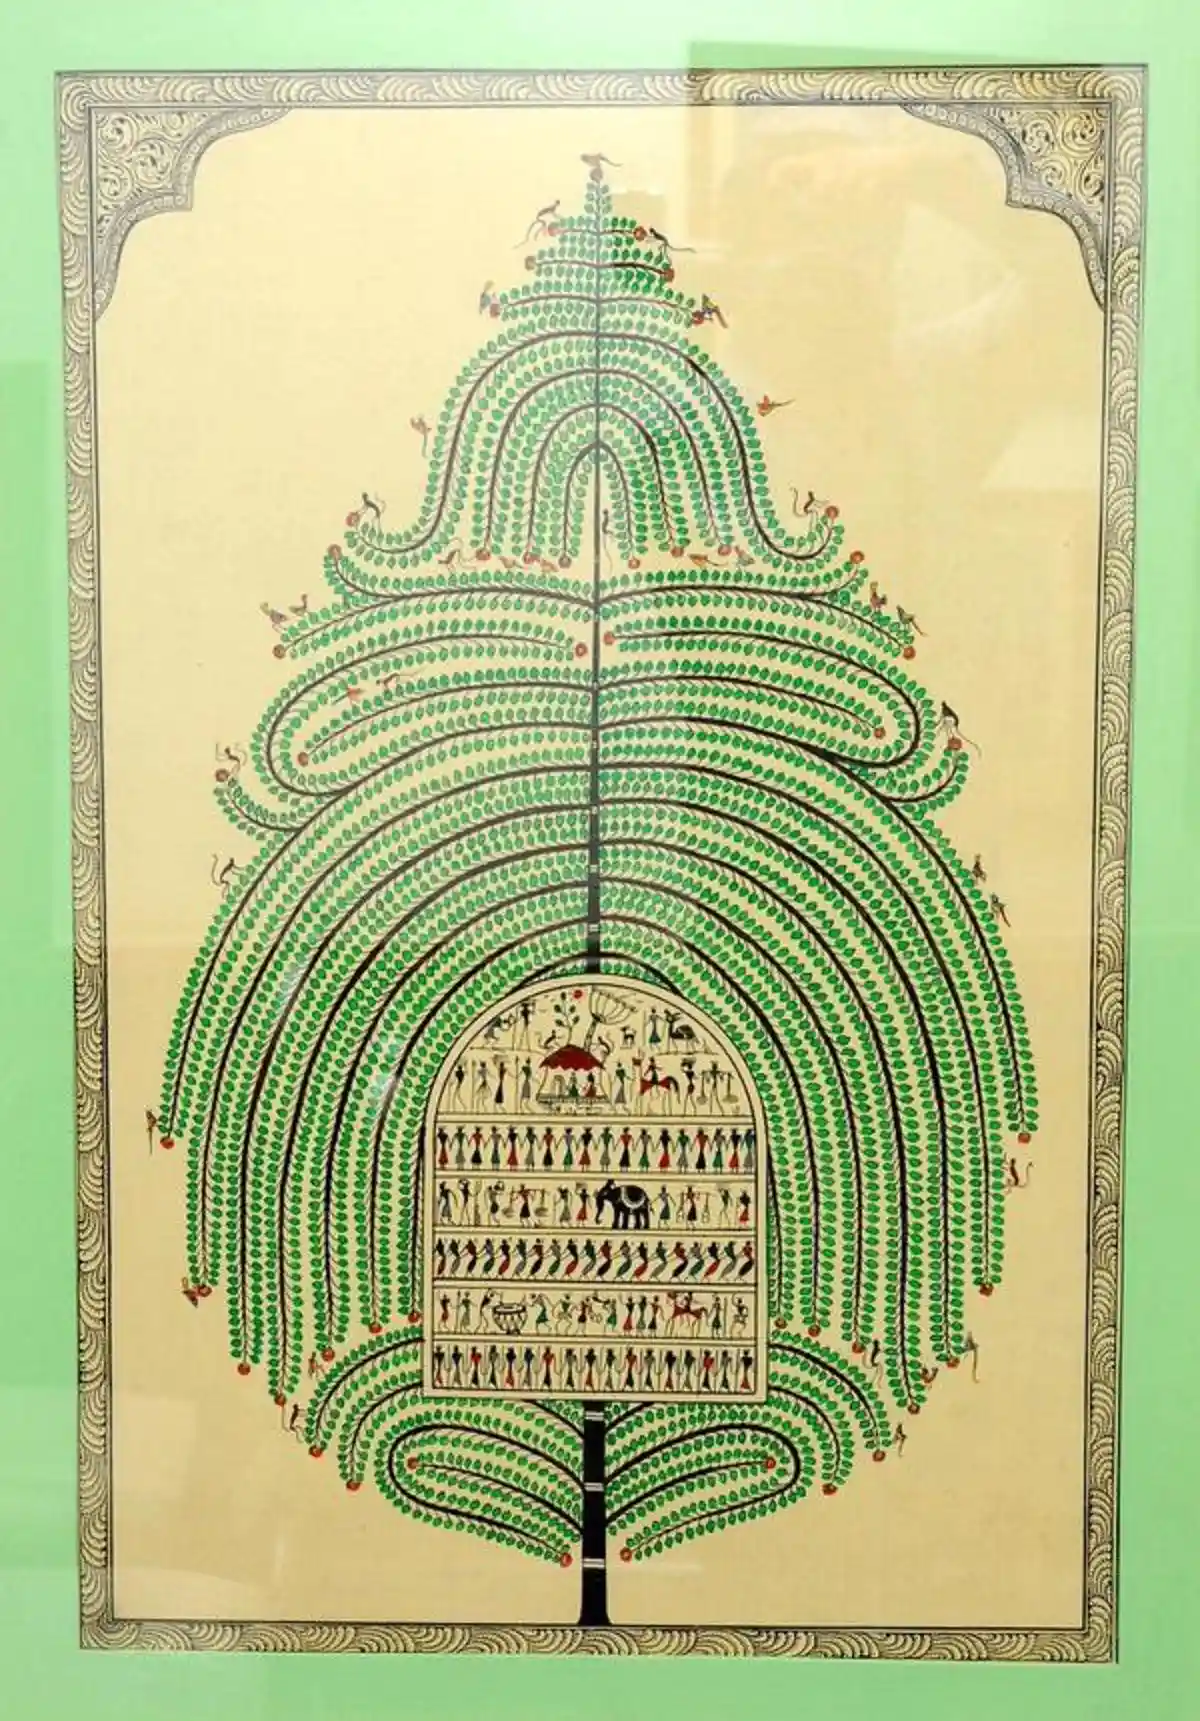 The Tree of Life representing the Nabakalebara Festival; Image Source: eOdisha- WordPress